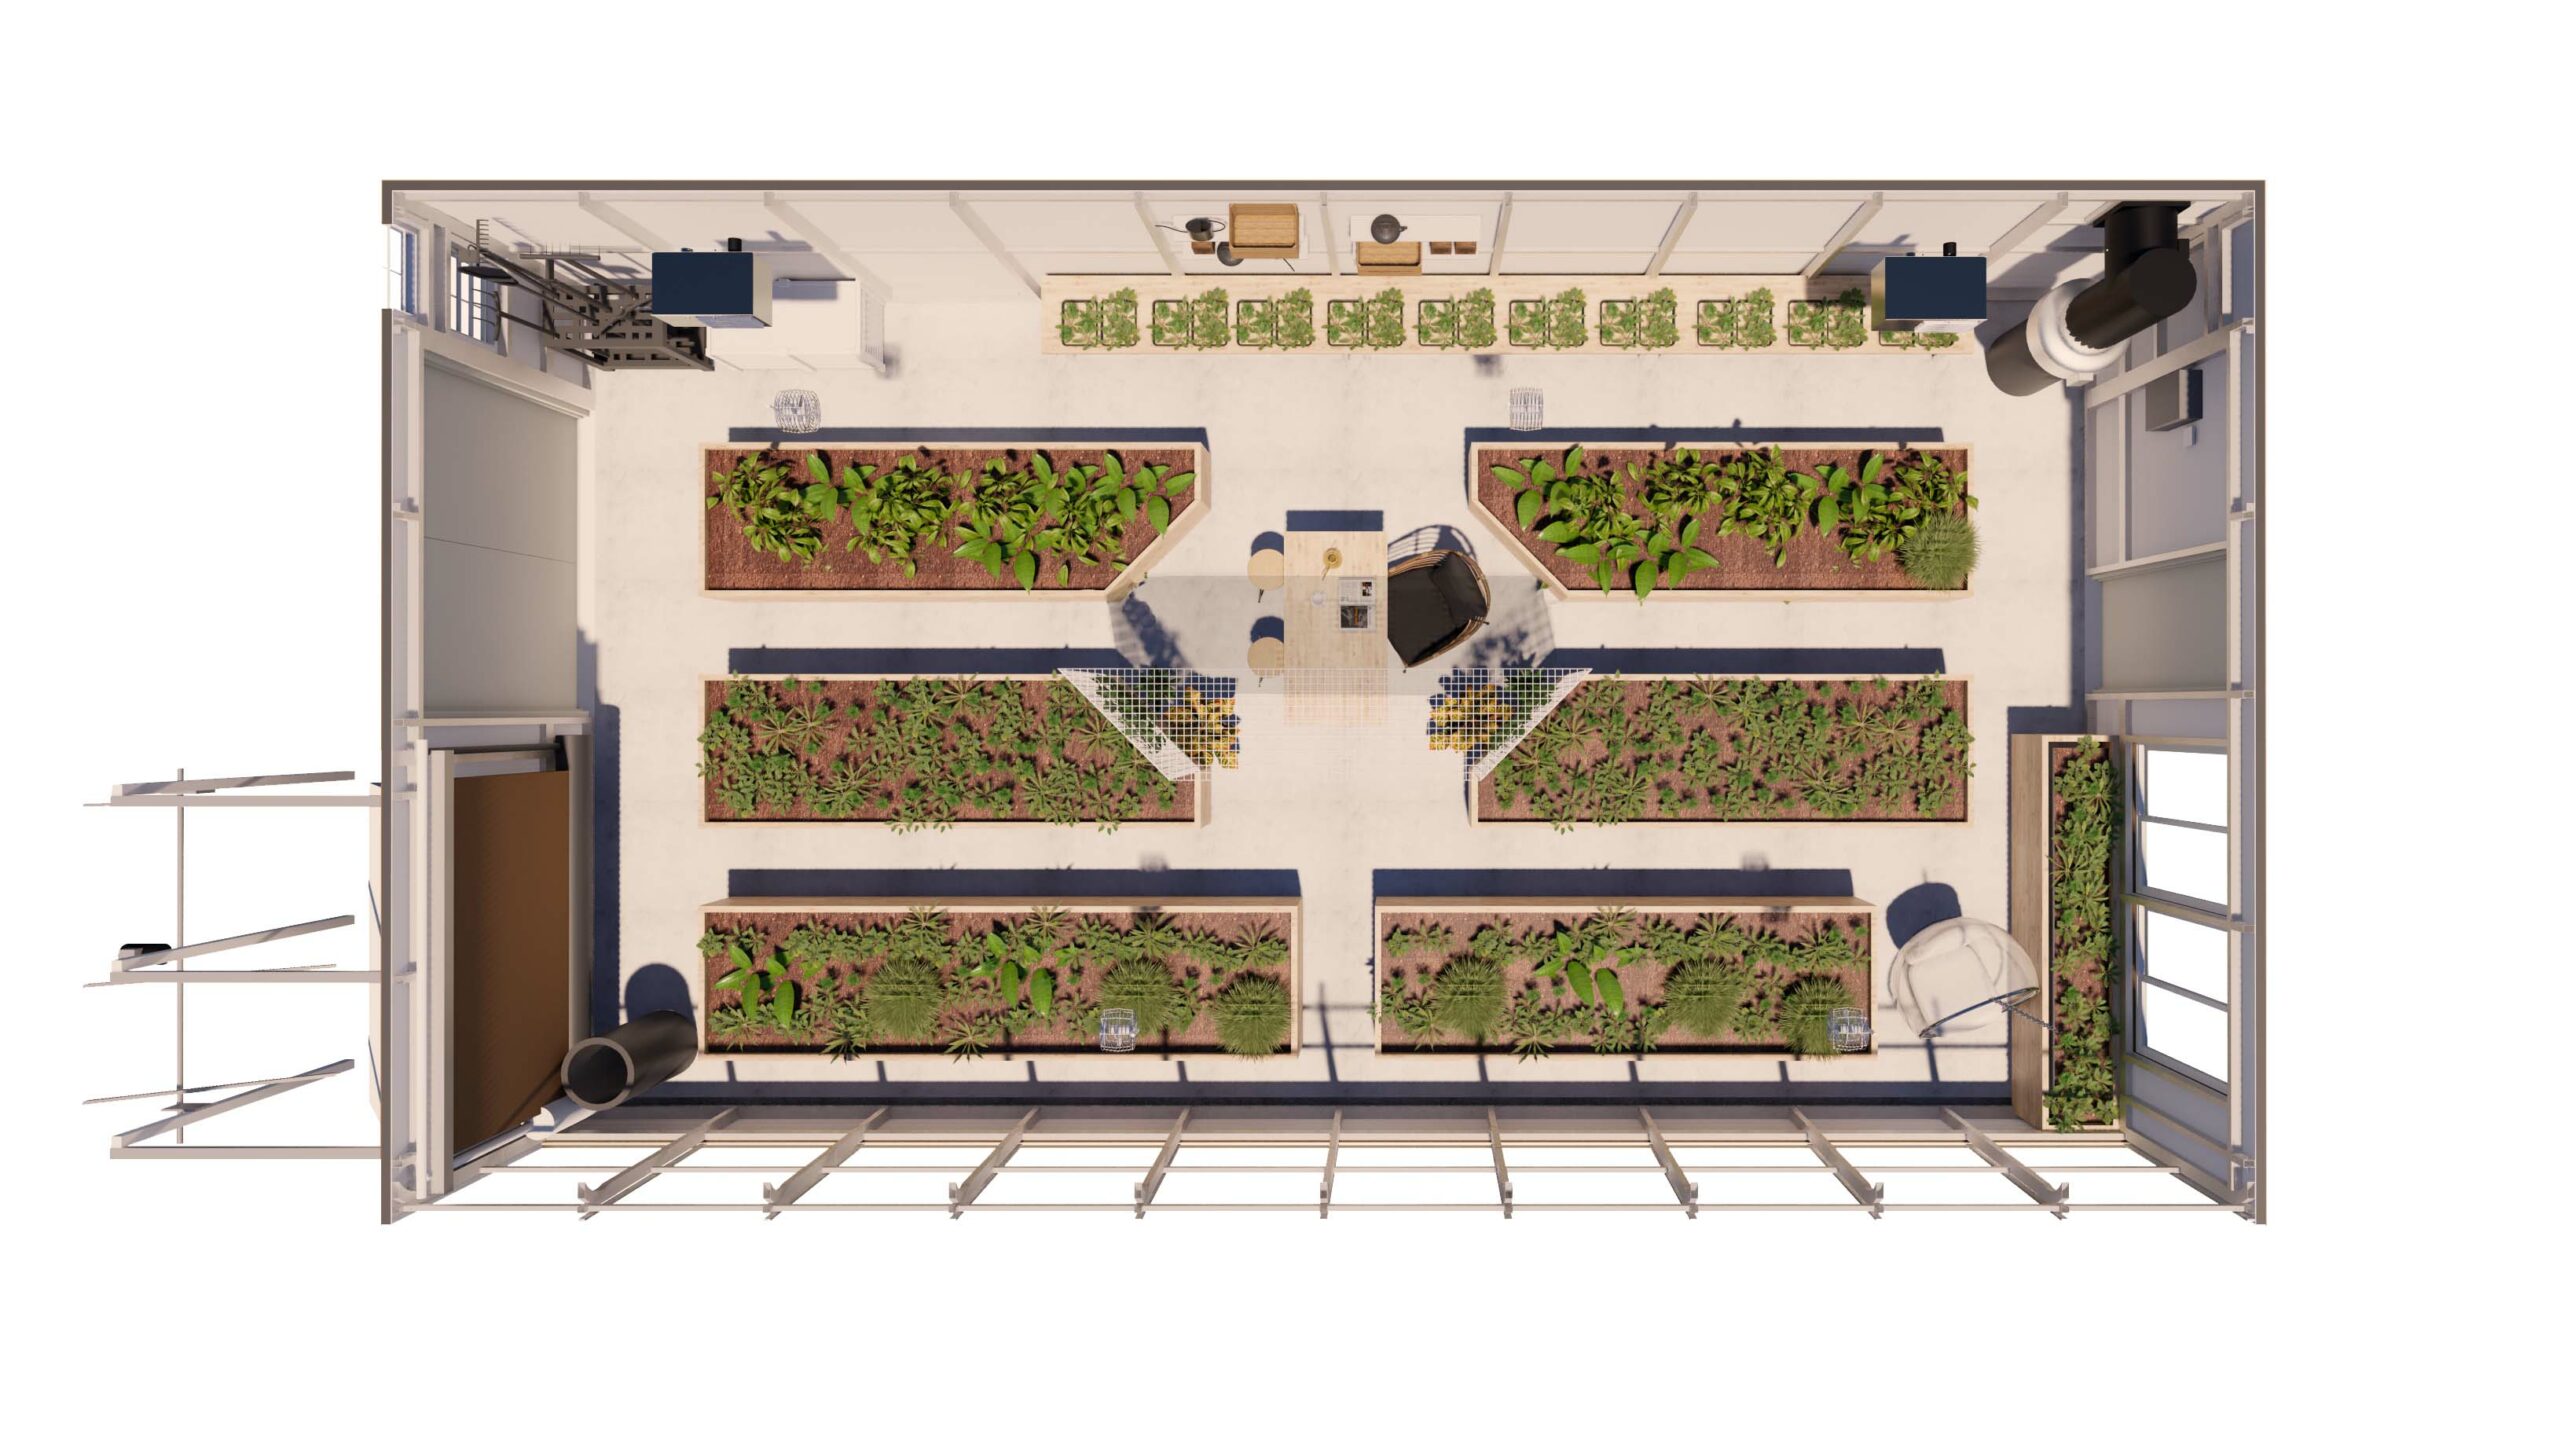 backyard kit greenhouse grow plan